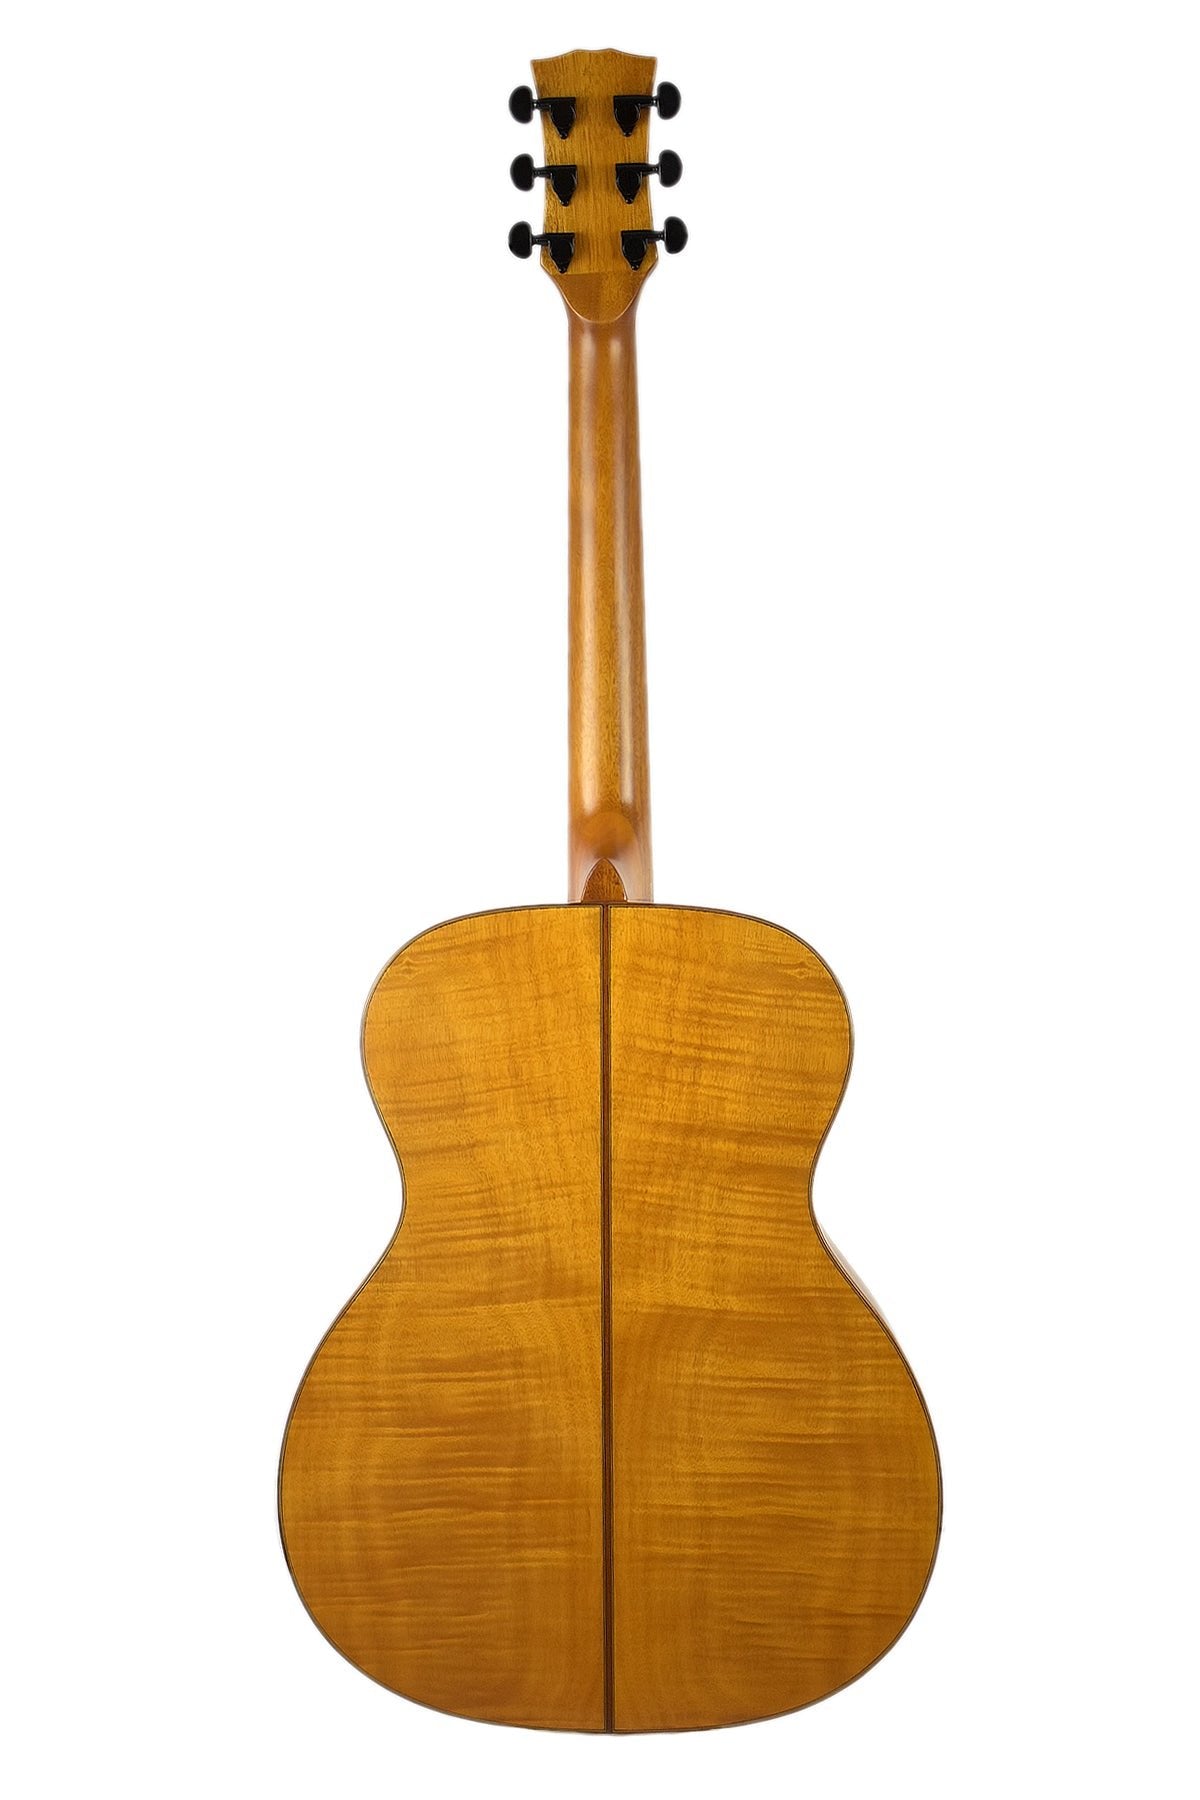 Klema Solid Canadian Cedar Top Flamed Mahogany Body Jumbo Acoustic Guitar - Natural K200JC